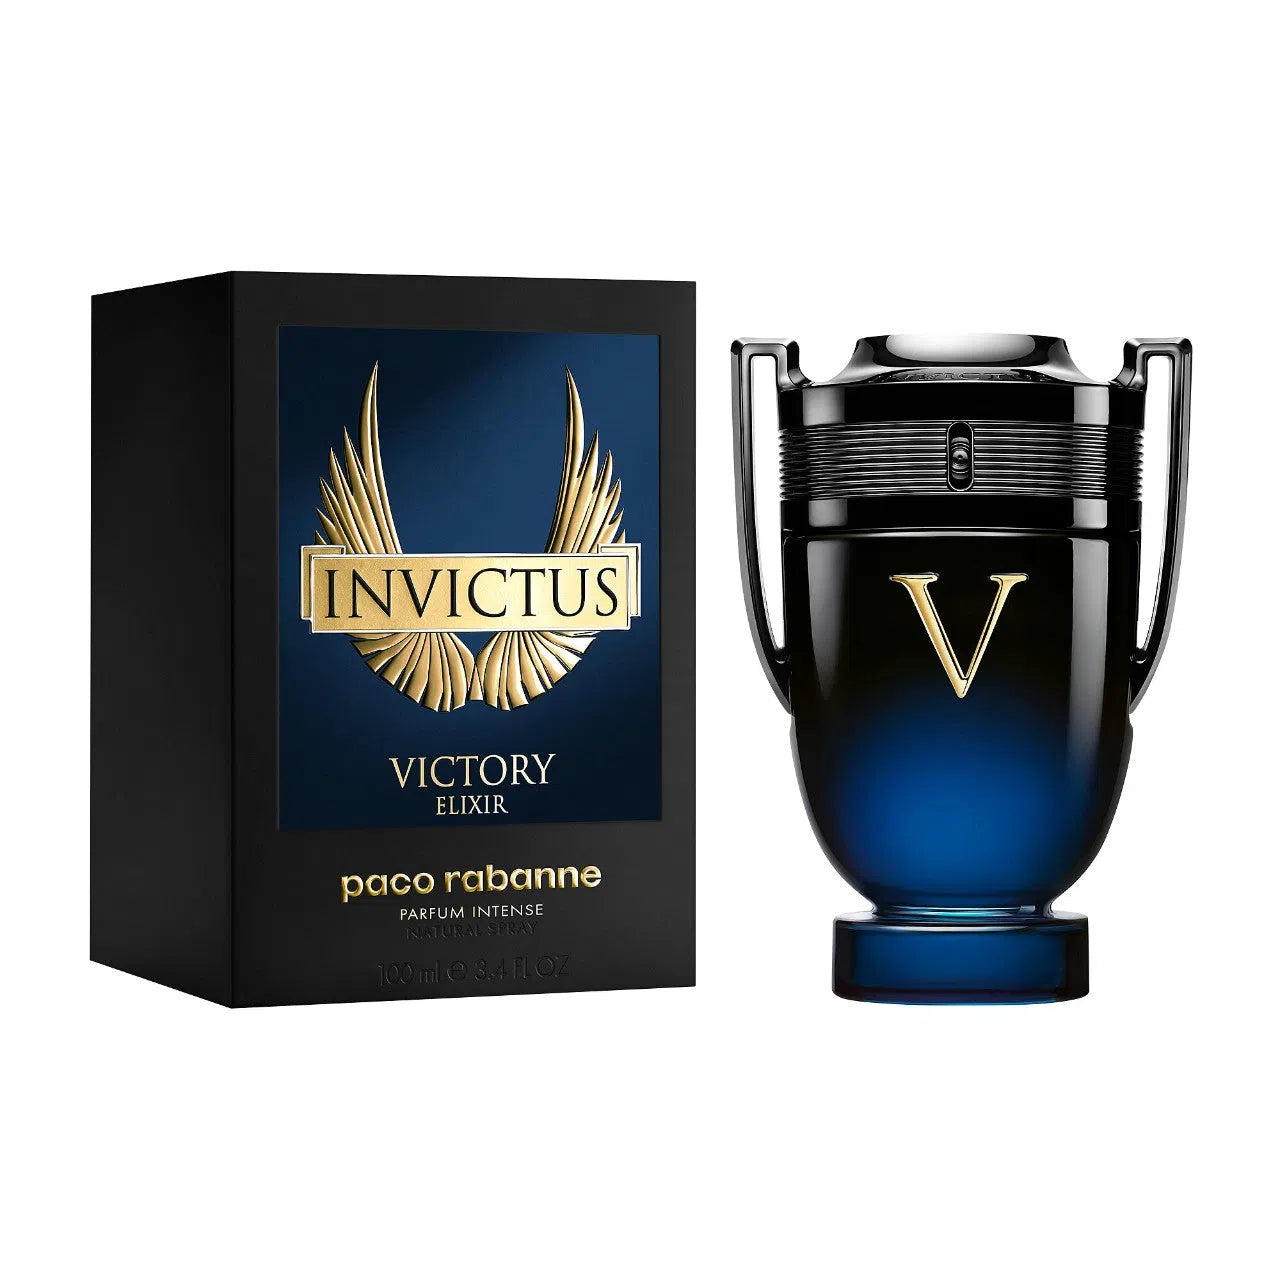 Perfume Paco Rabanne Invictus Victory Elixir Parfum (M) / 100 ml - 3349668614523- Prive Perfumes Honduras